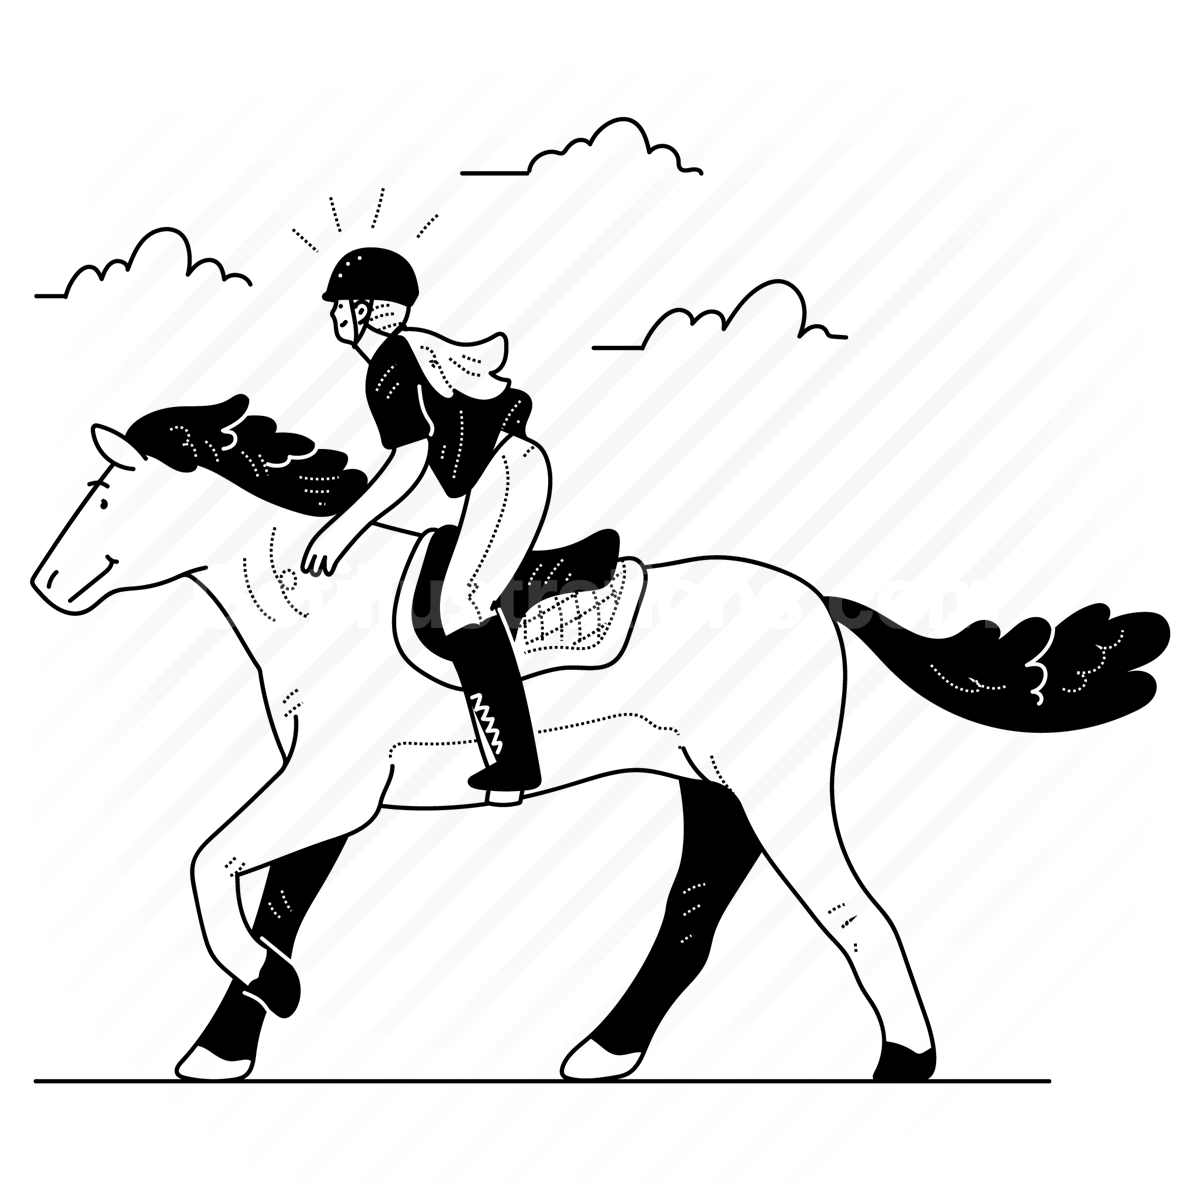 riding, horse, horse riding, sport, outdoors, activity, hobbies